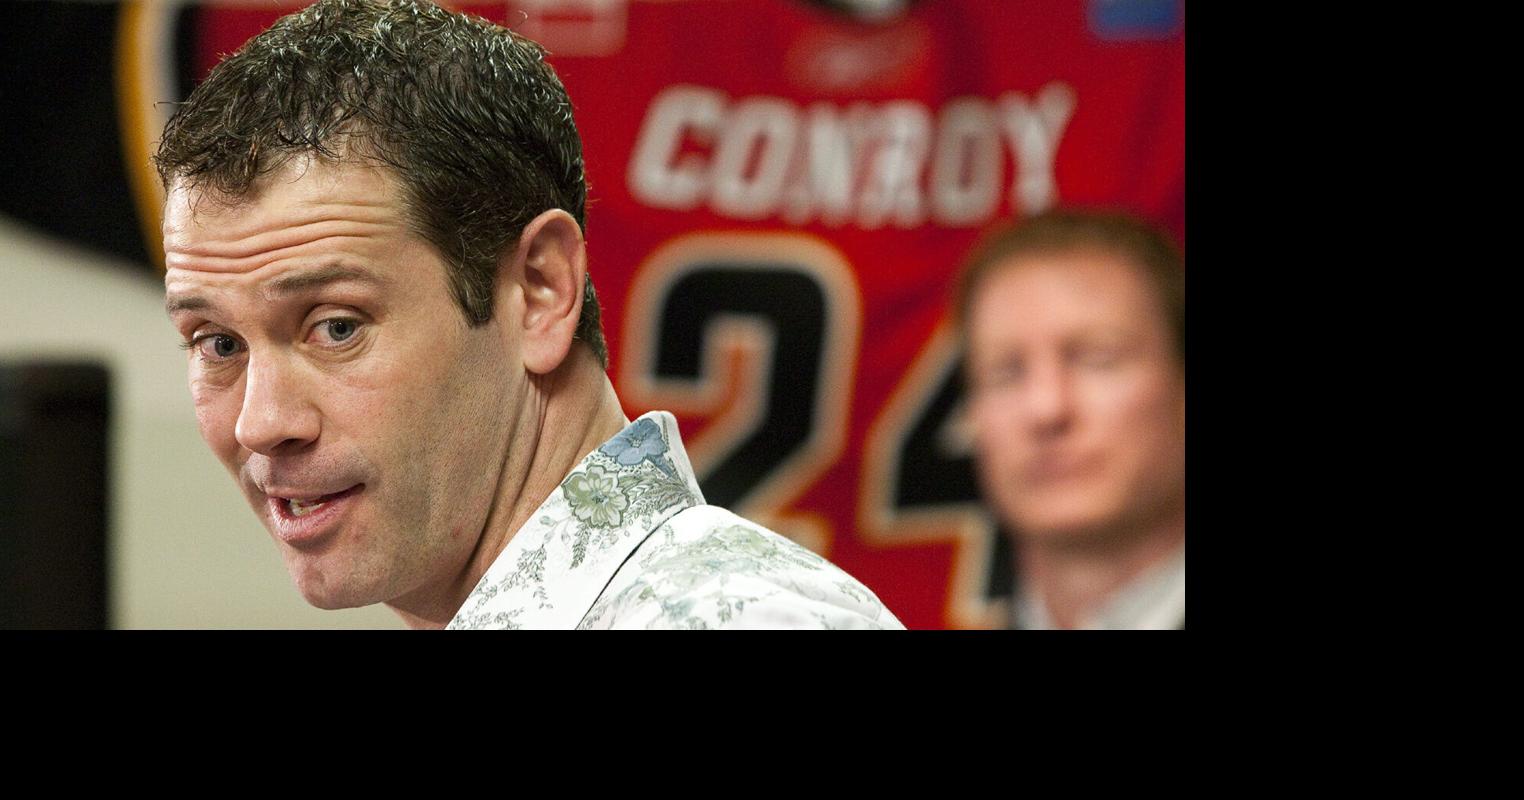 Calgary Flames announce Craig Conroy as new GM